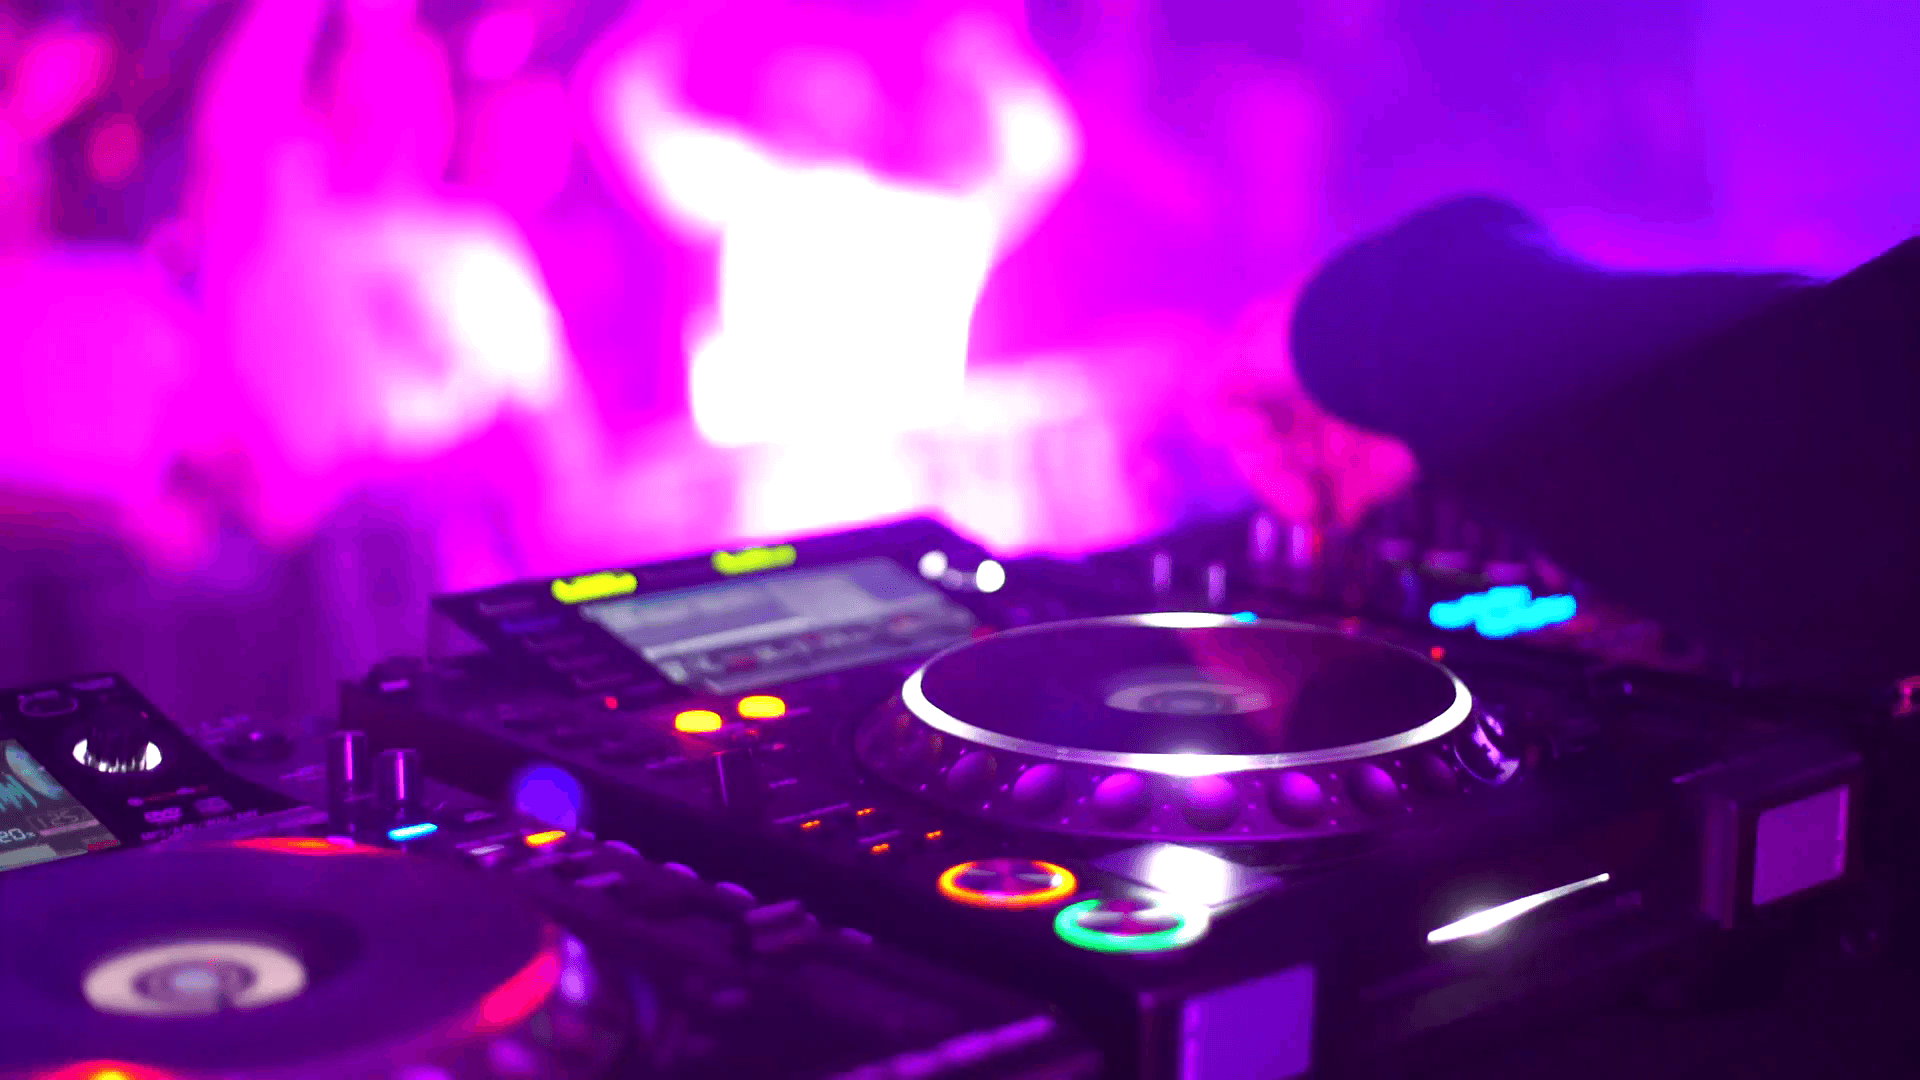 DJ disk jockey mixing songs at his desk turntable in nightclub. Two